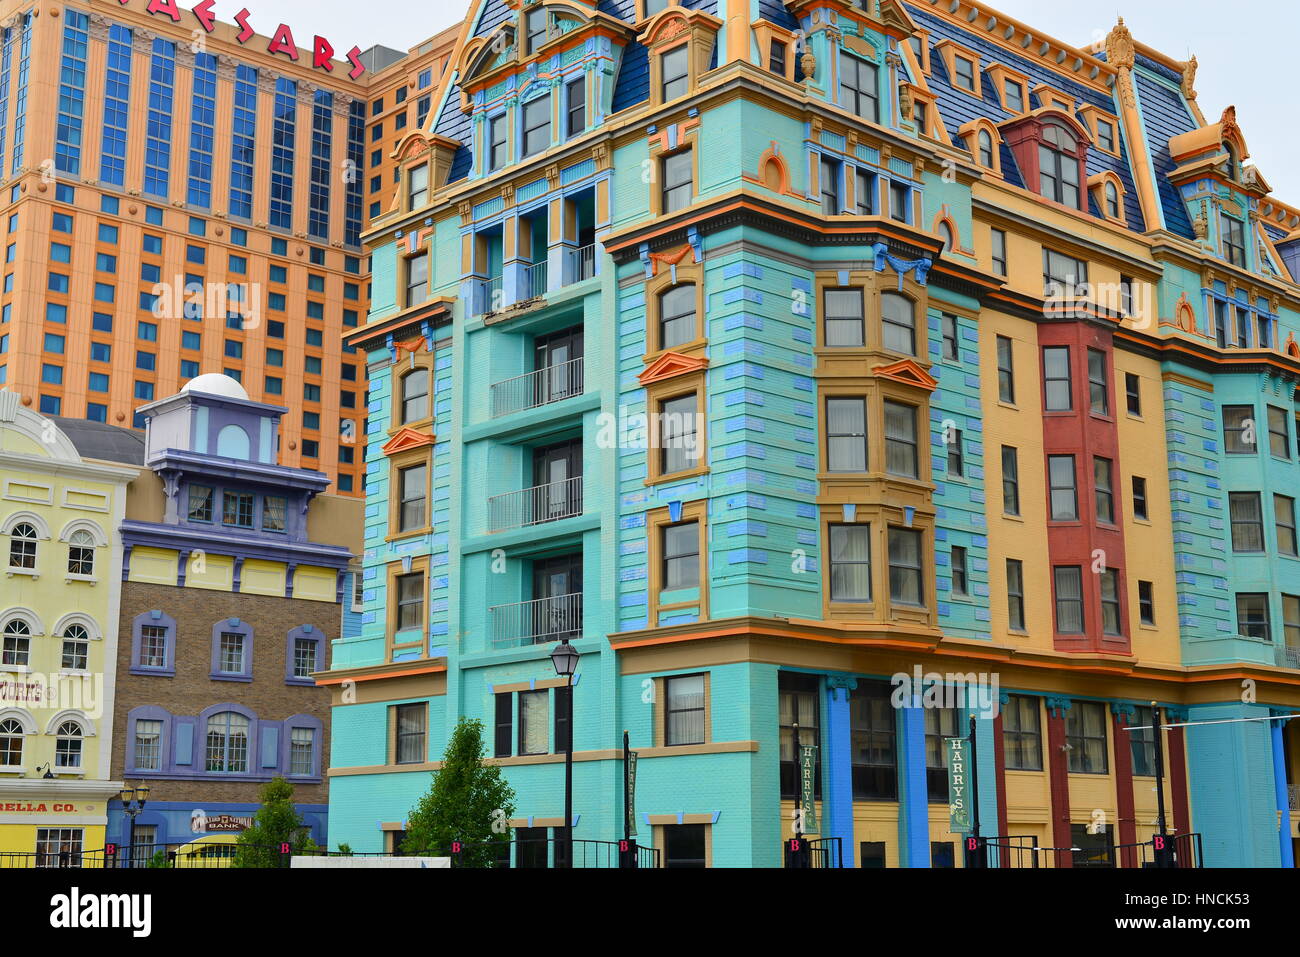 Szene des Gebäudes, Hintergrund oder abstrakt Kontrast/Farbkombination in Atlantic City/Promenade, New Jersey, USA Stockfoto